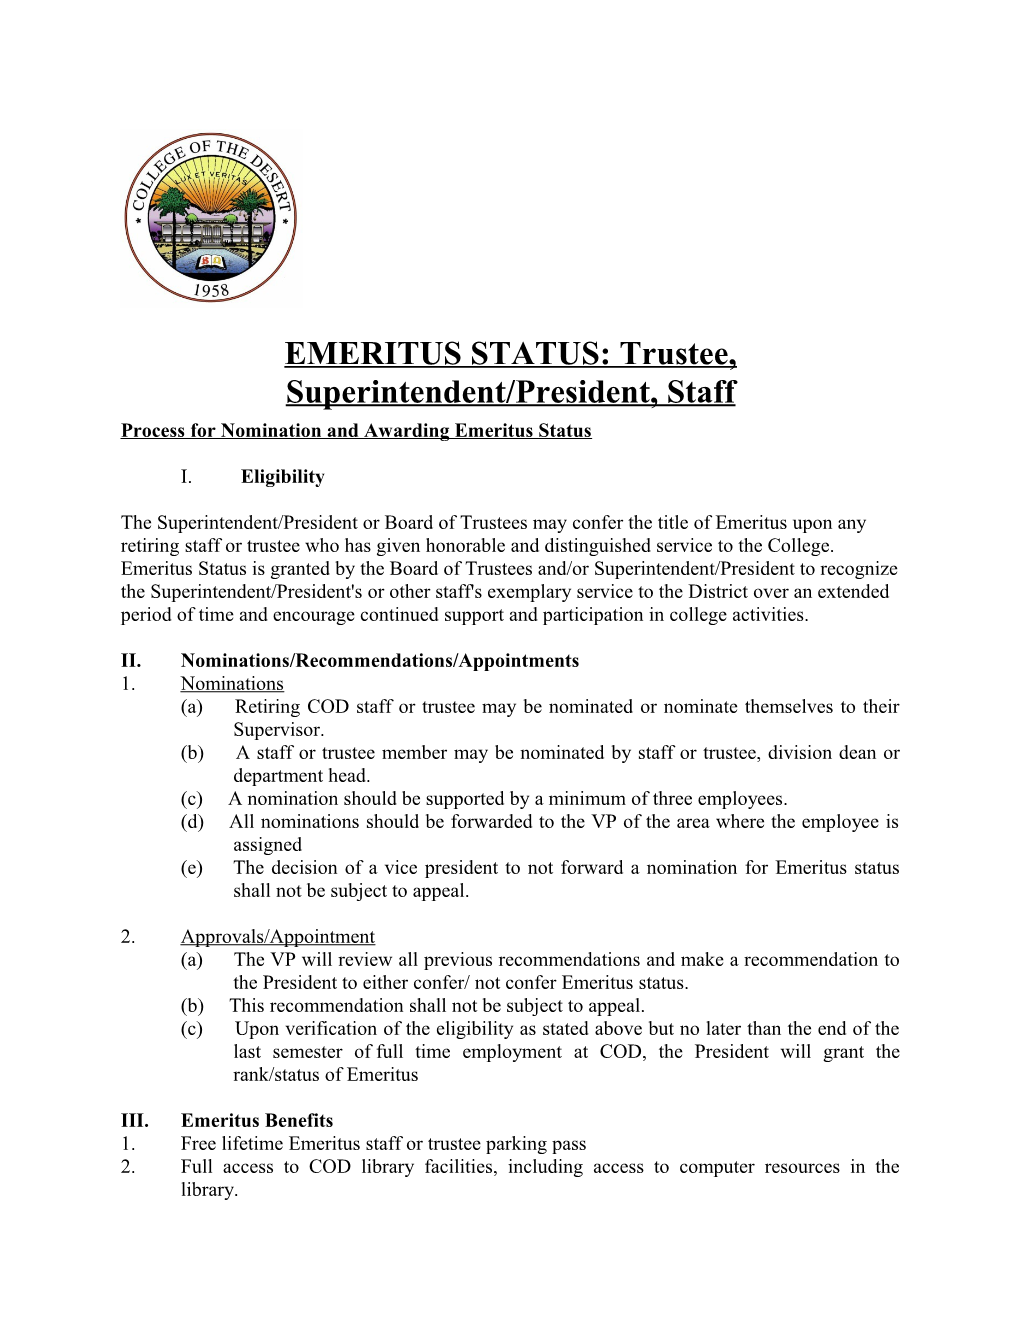 EMERITUS STATUS: Trustee, Superintendent/President, Staff